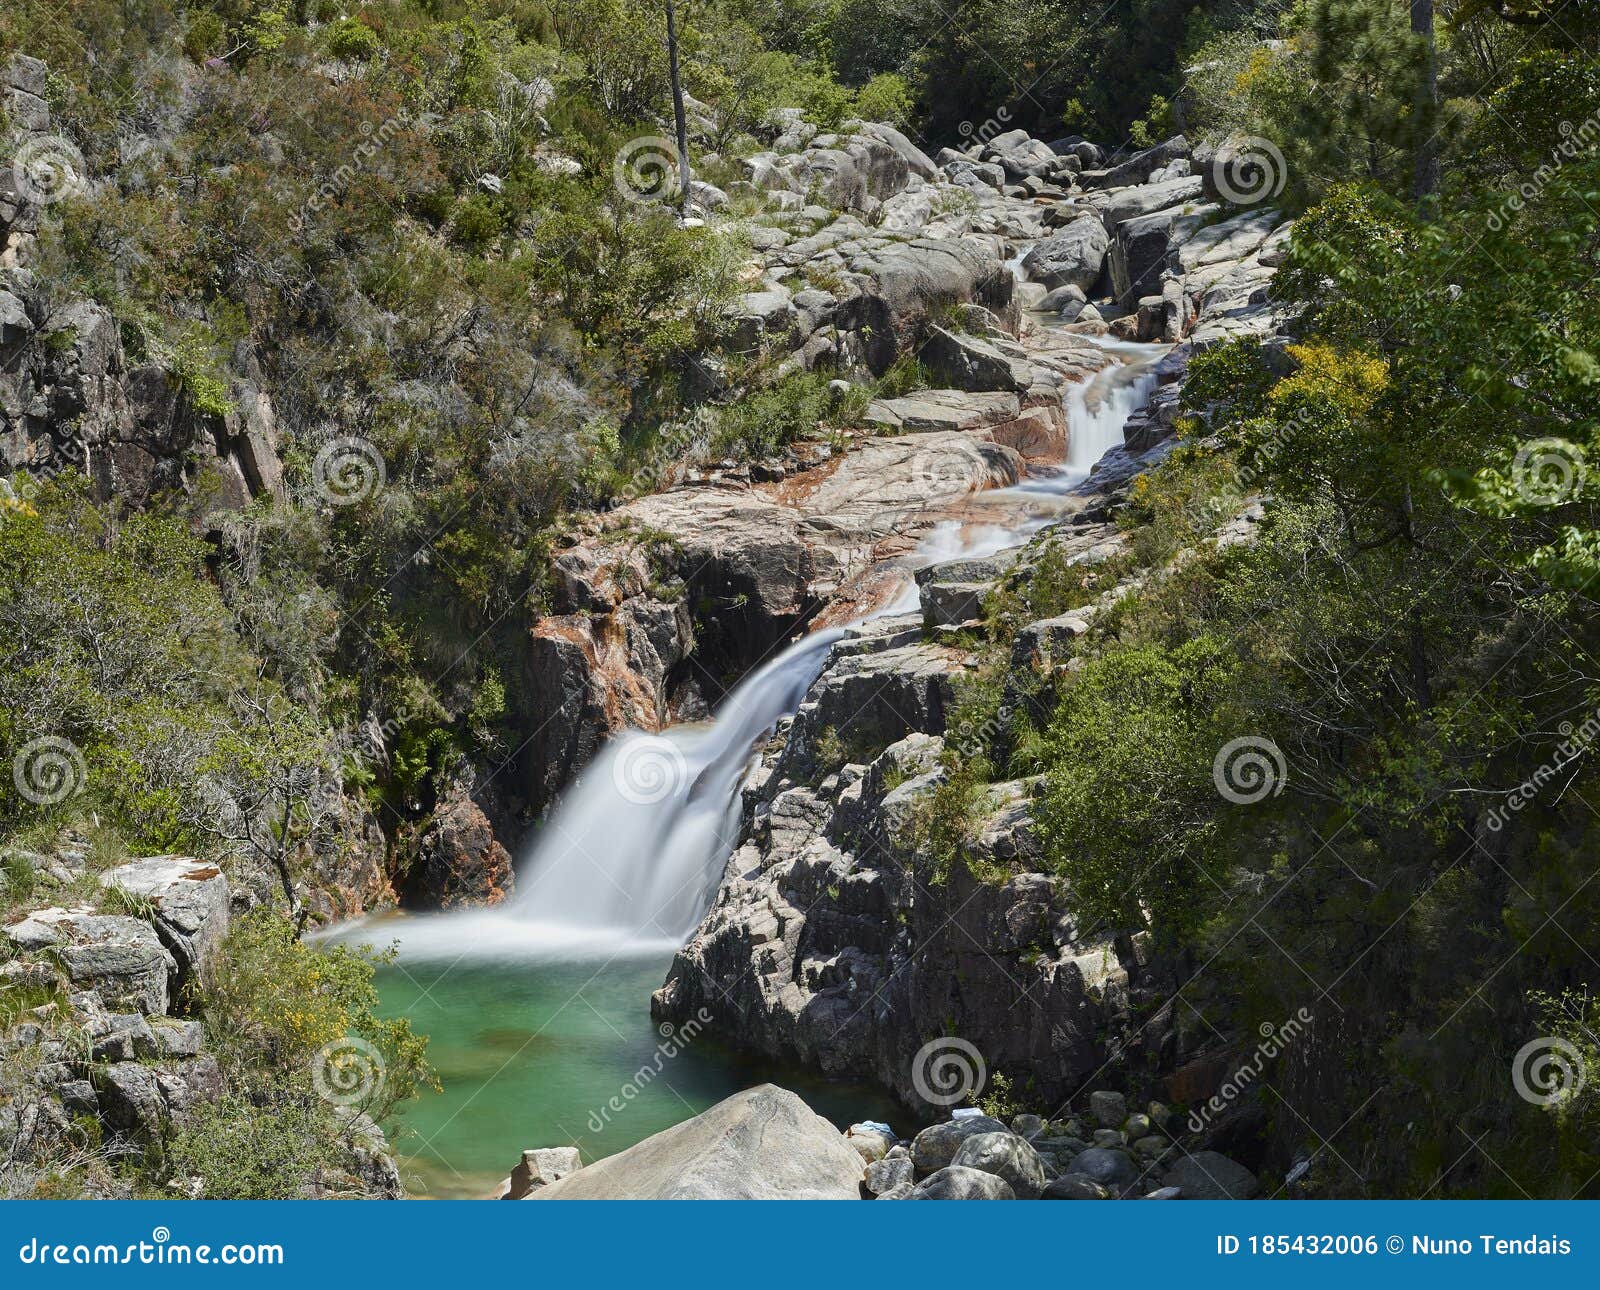 waterfall of portela do homem running to green lake